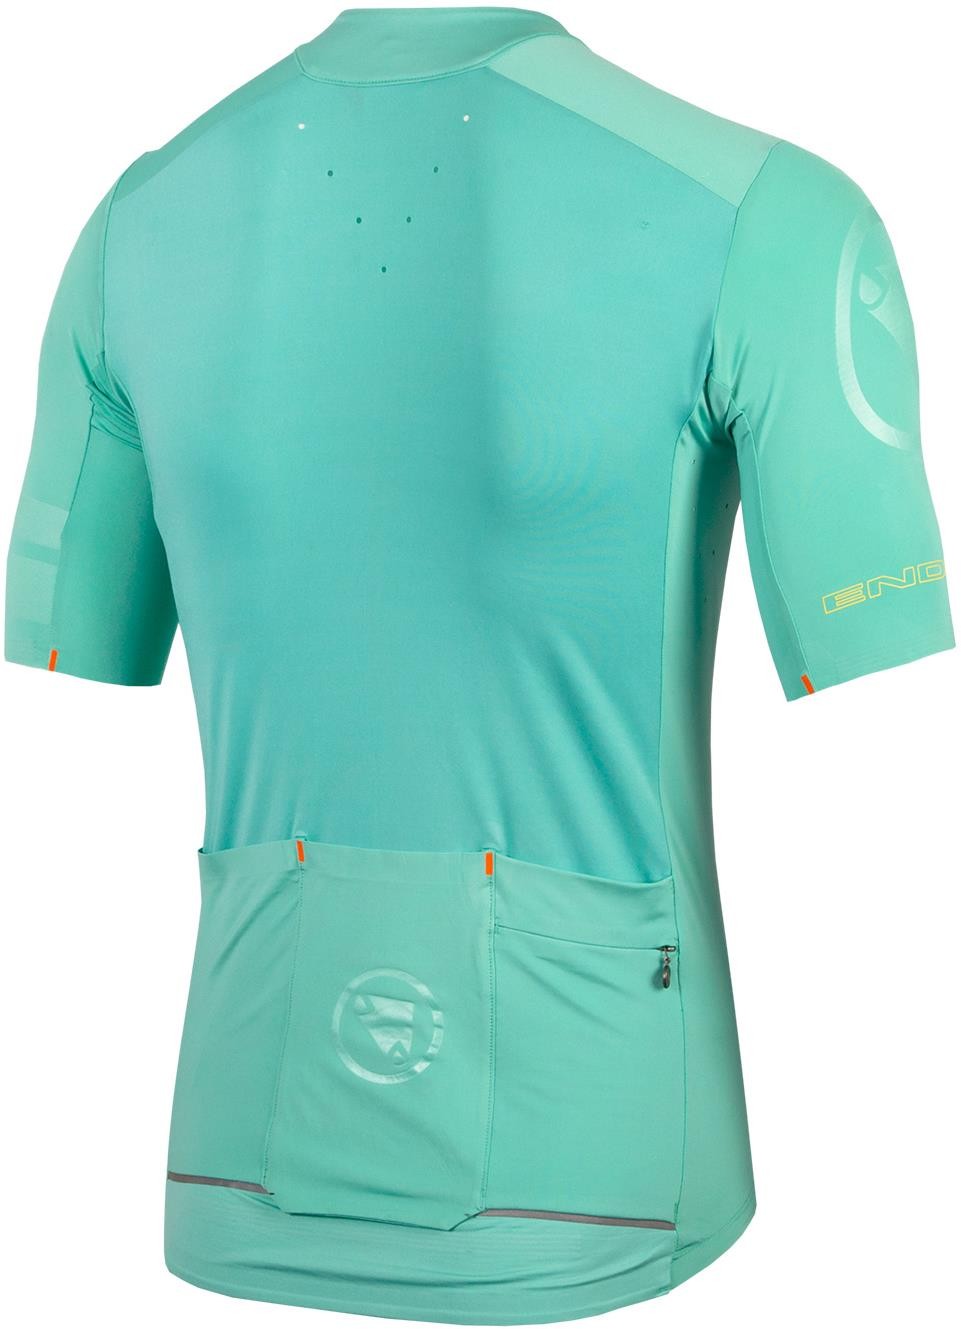 Pro SL Short Sleeve Cycling Jersey image 1